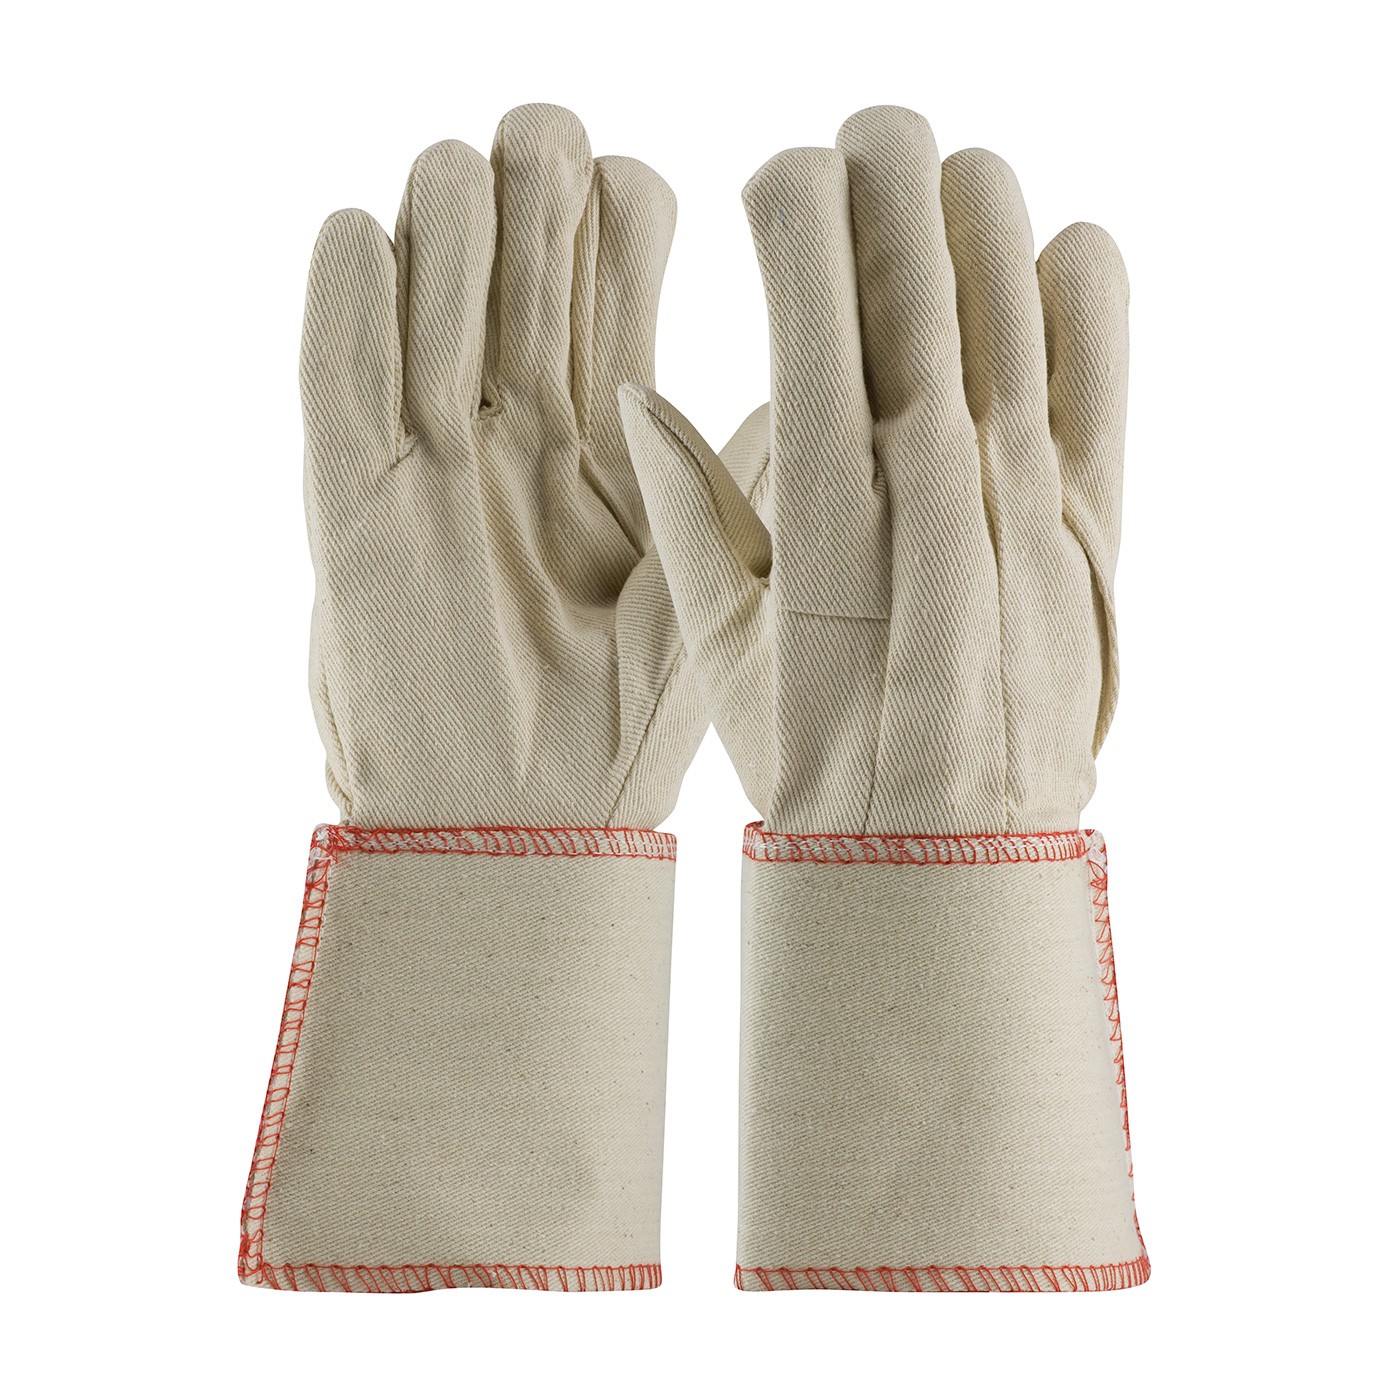 PIP® Premium Grade Cotton Canvas Single Palm Glove - Plasticized Gauntlet Cuff  (#90-910GA)